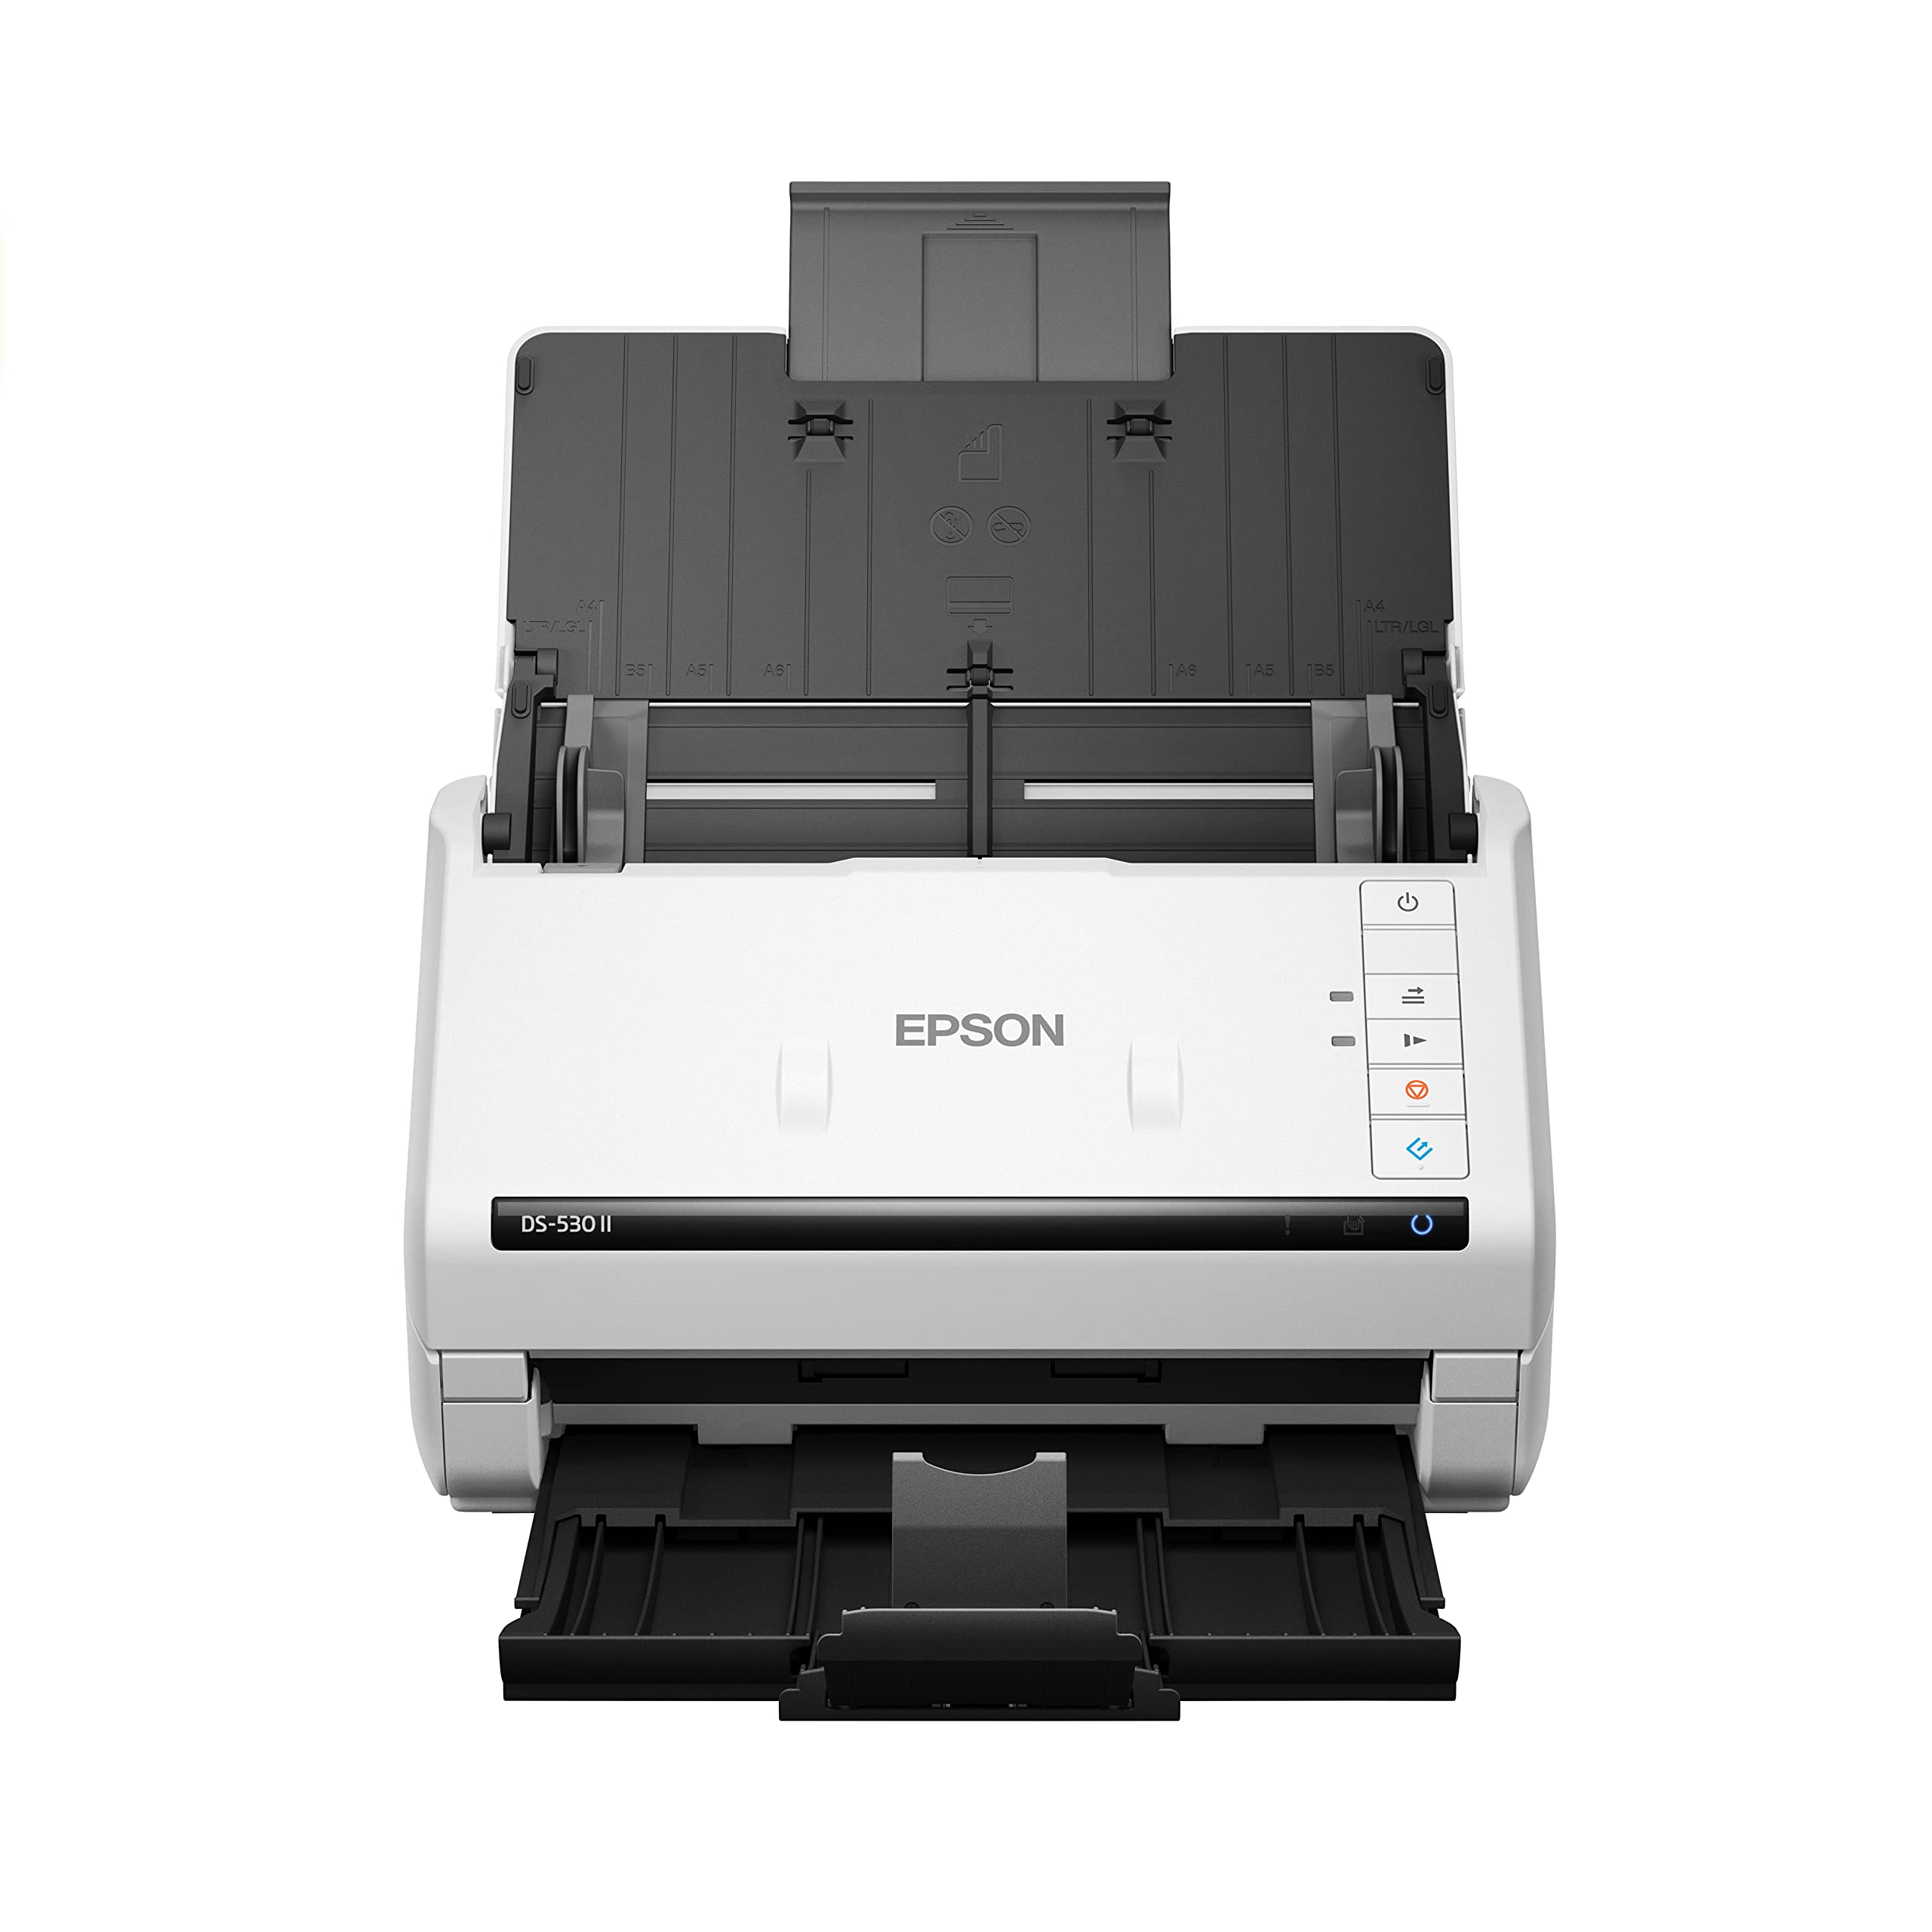 Epson DS-530 II カラー両面ドキュメント スキャナ (シートフィード、自動ドキュメント フィーダ...